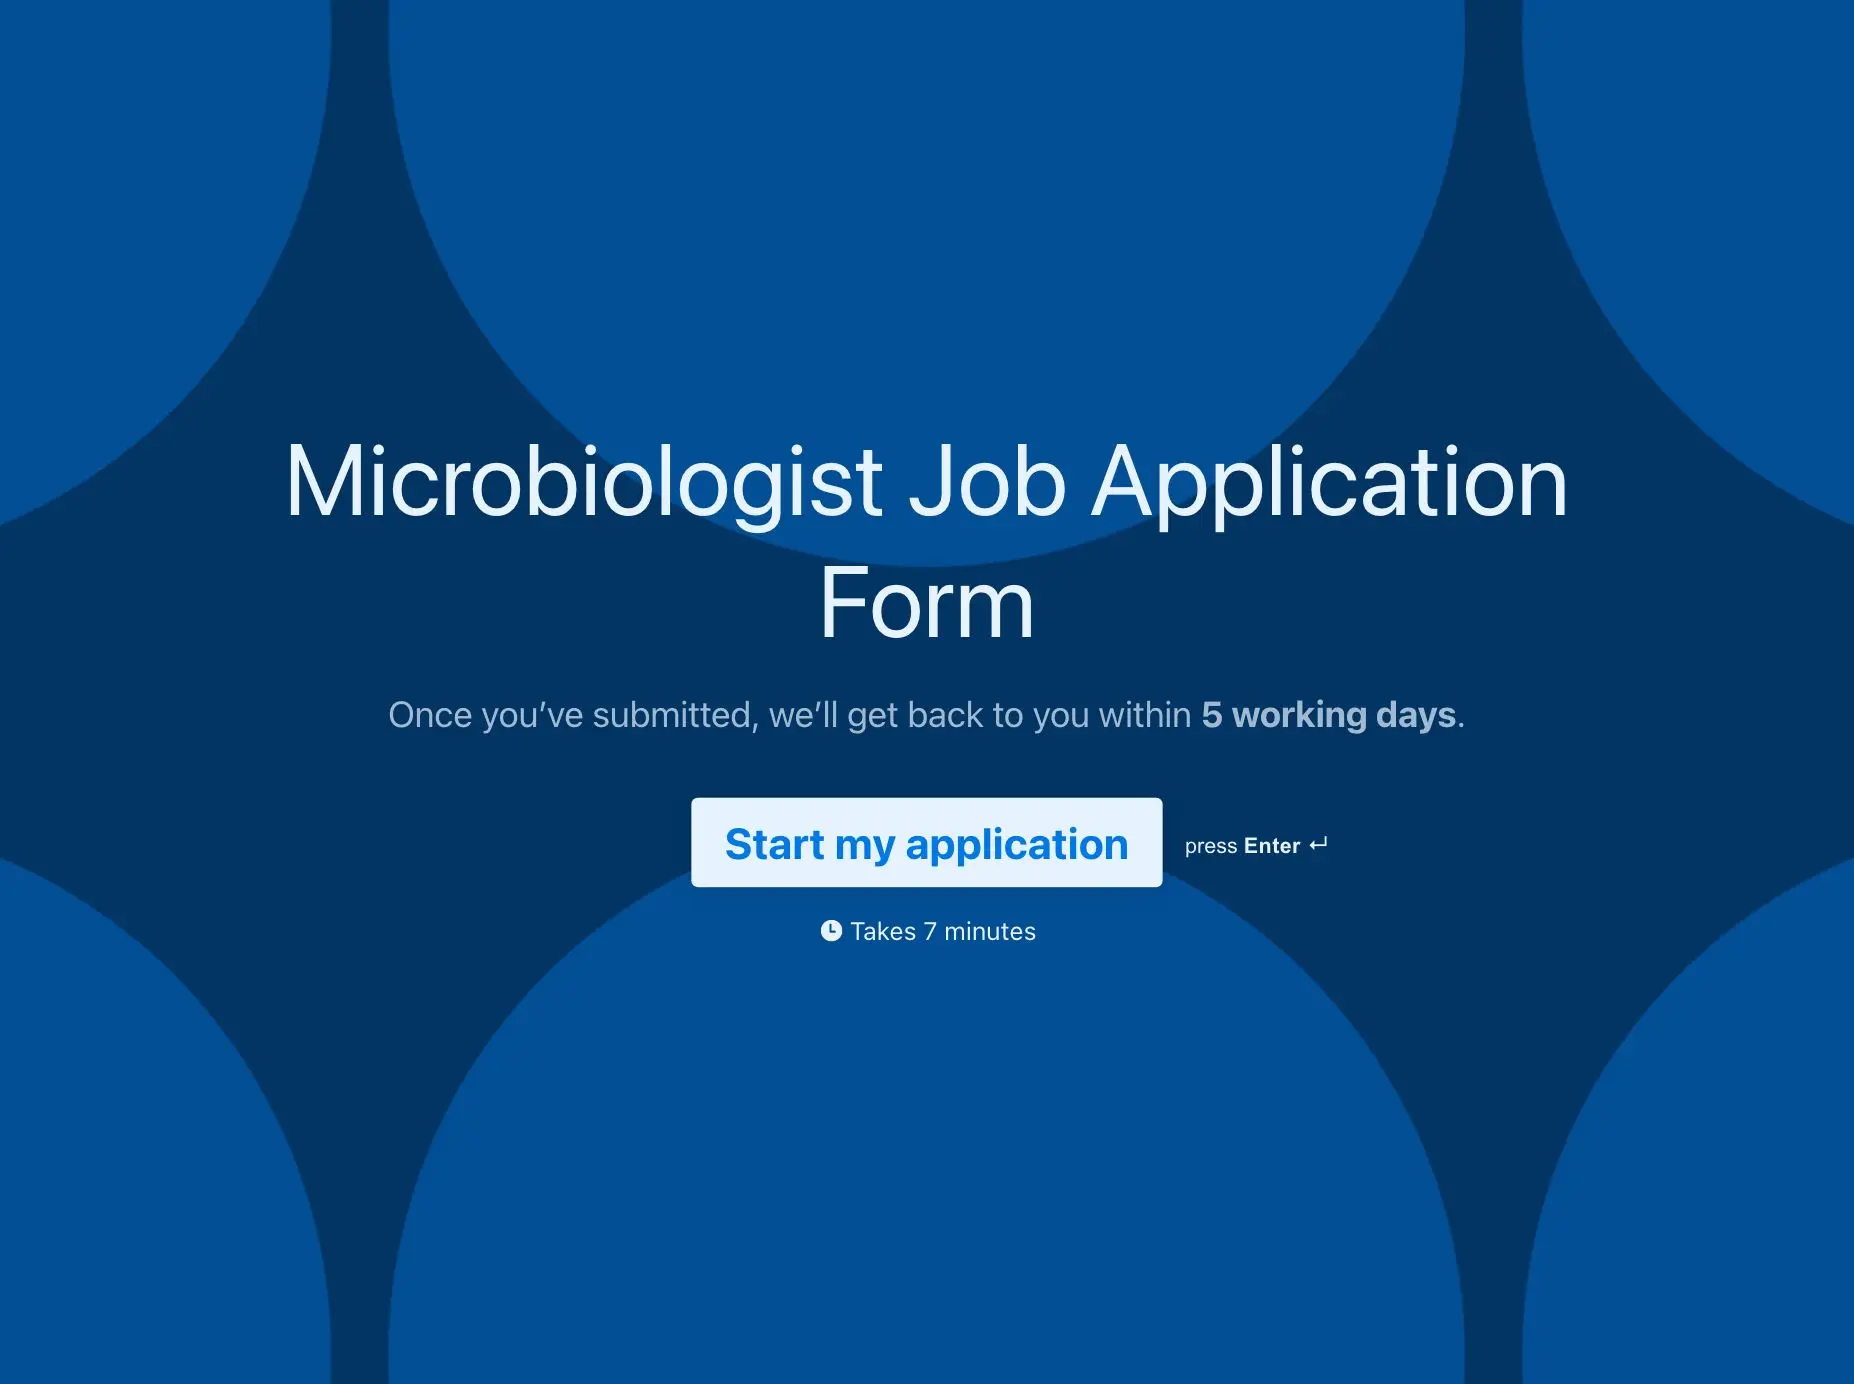 Microbiologist Job Application Form Template Hero